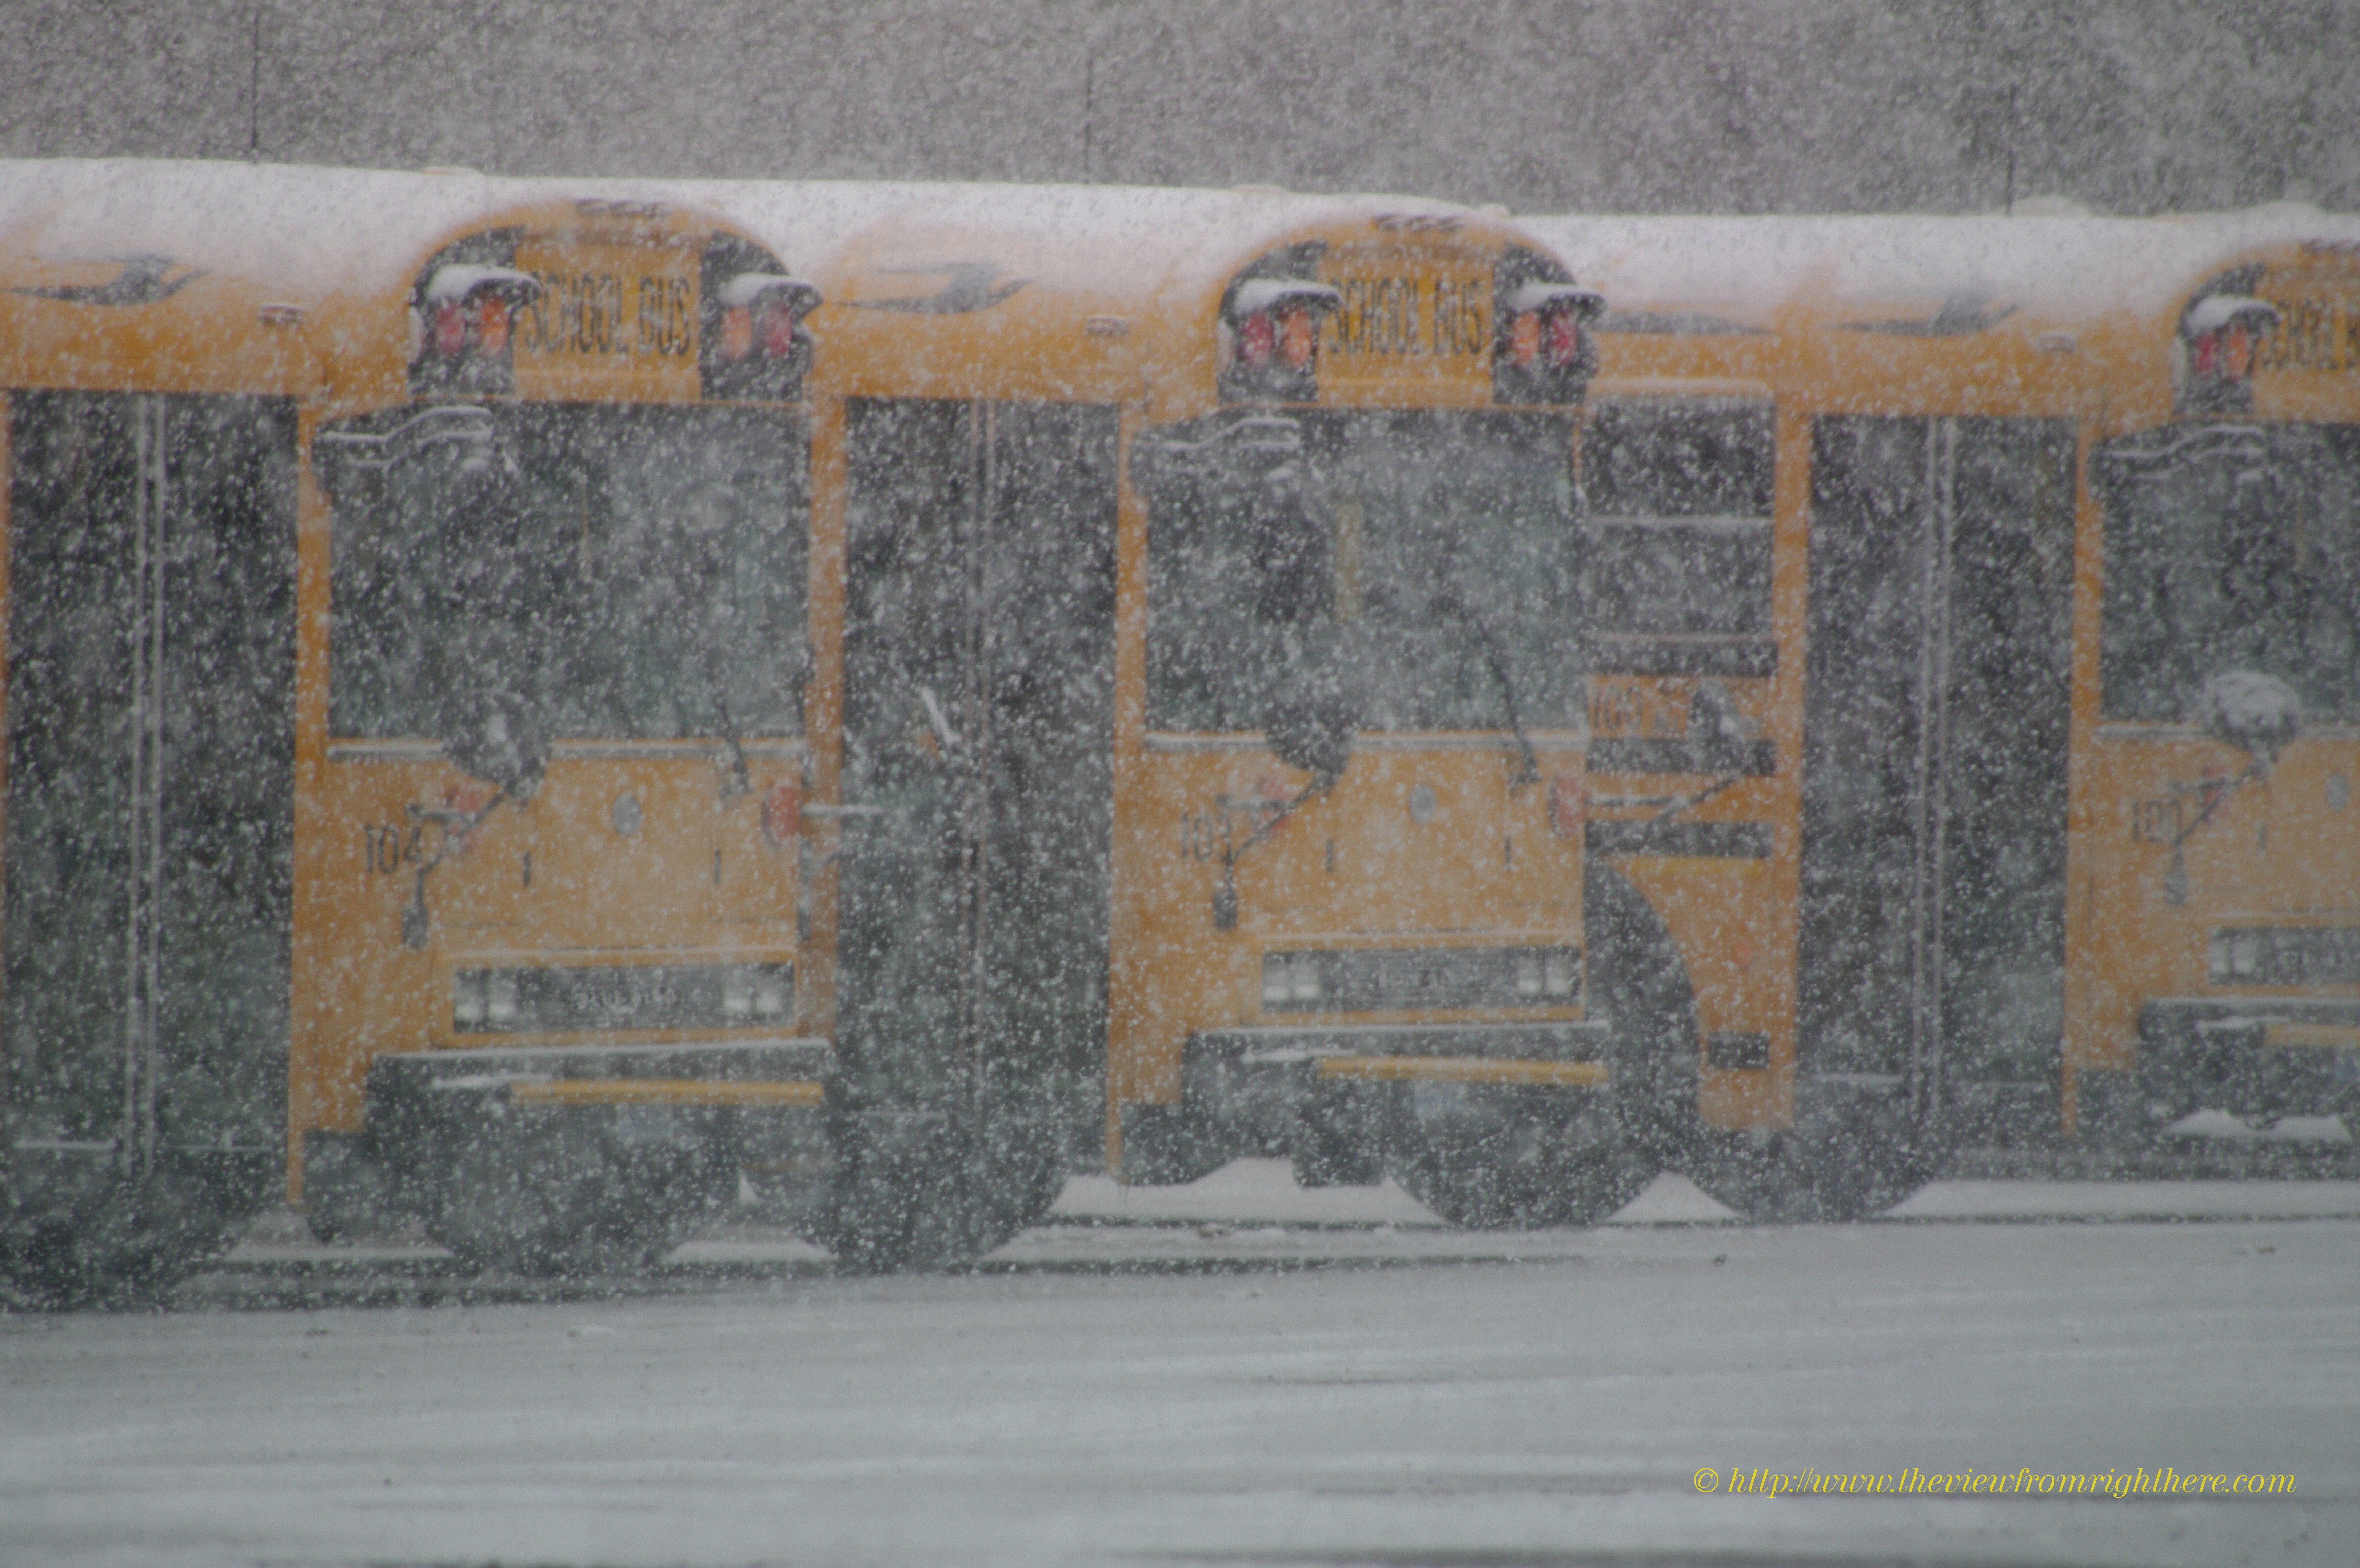 School Buses Waiting – Snow…No School